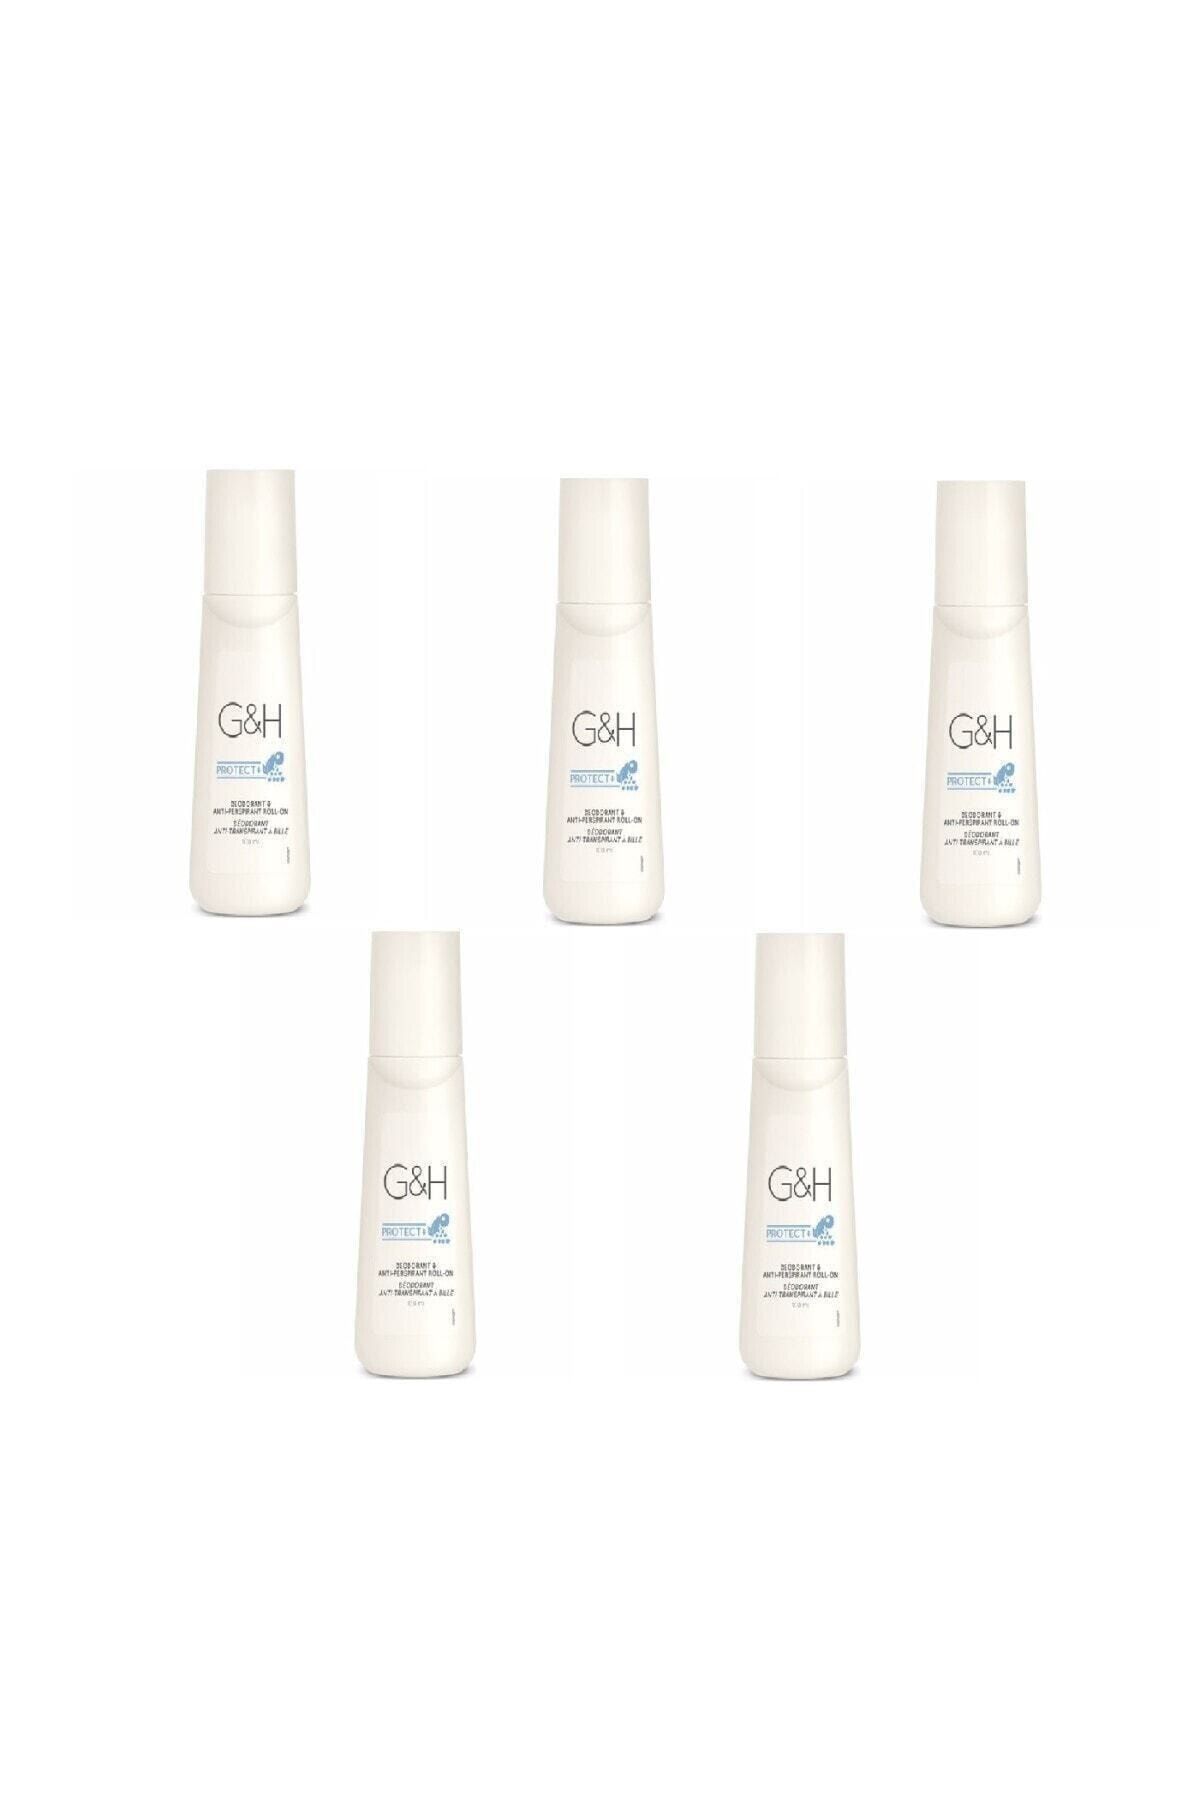 Amway Terlemeye Karşı/koku Giderici Roll-on Deodorant - G&h Protect+™birim: 100 Ml 5 Li Set